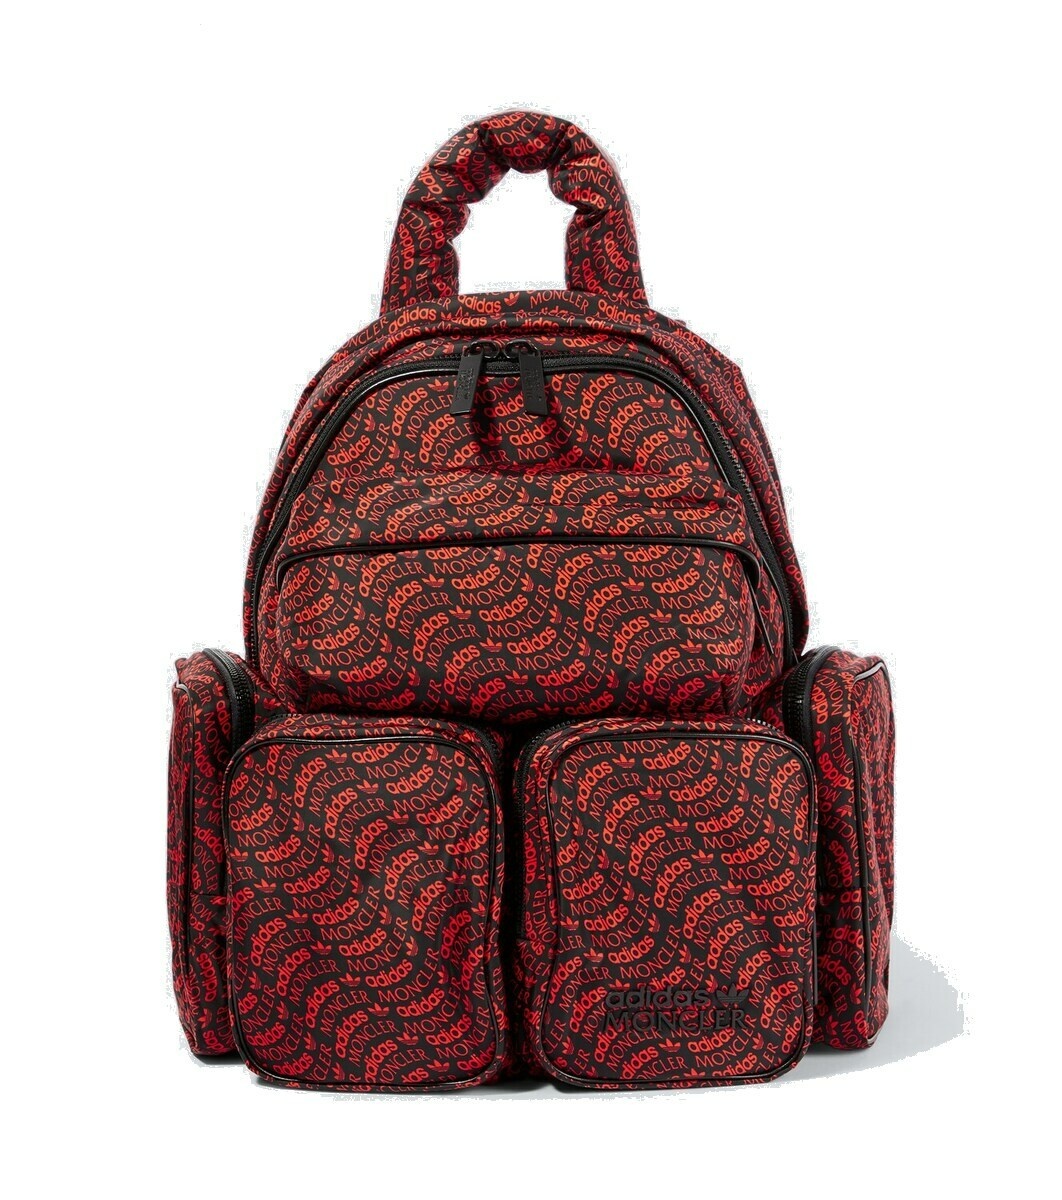 Photo: Moncler Genius x Adidas printed backpack